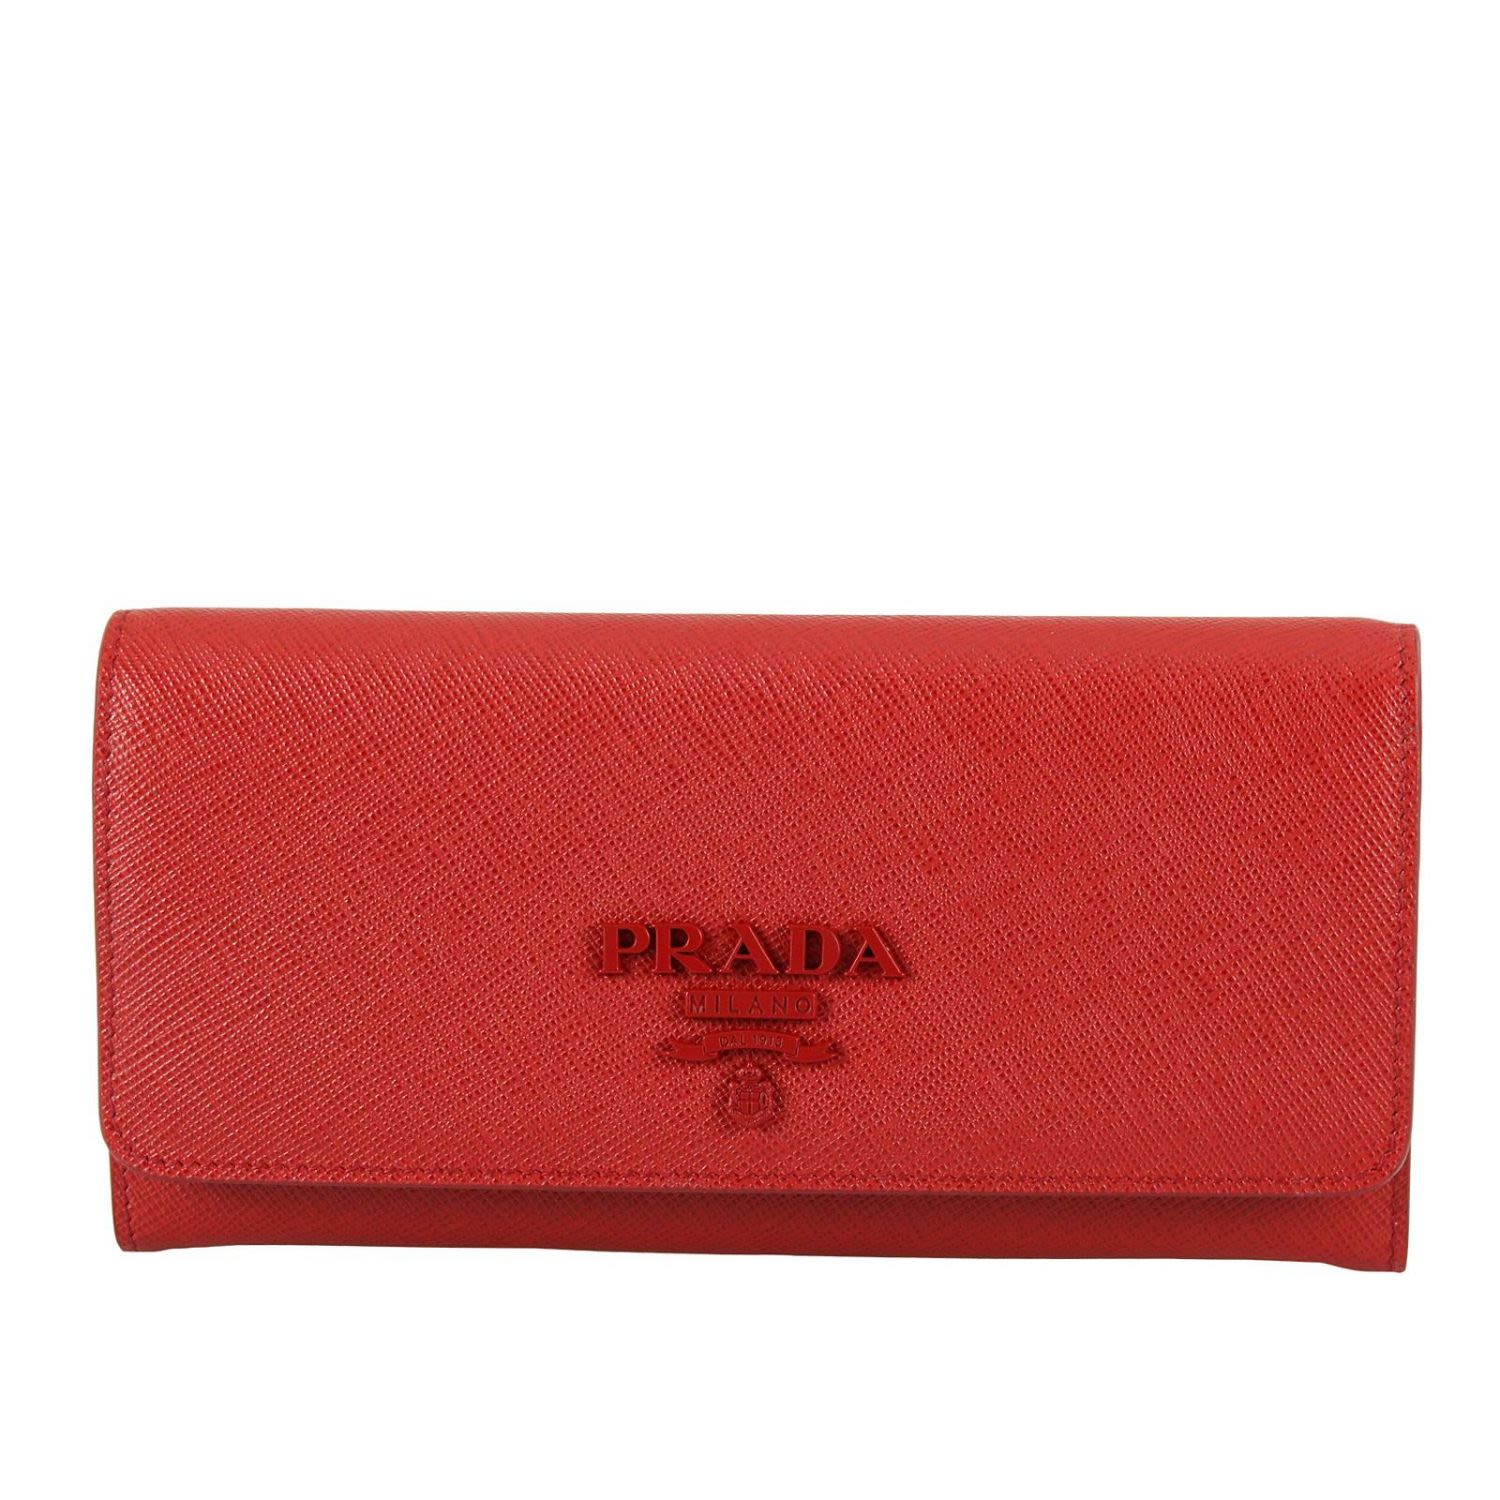 italist | Best price in the market for Prada Wallet Wallet Women Prada - red - 10494837 | italist